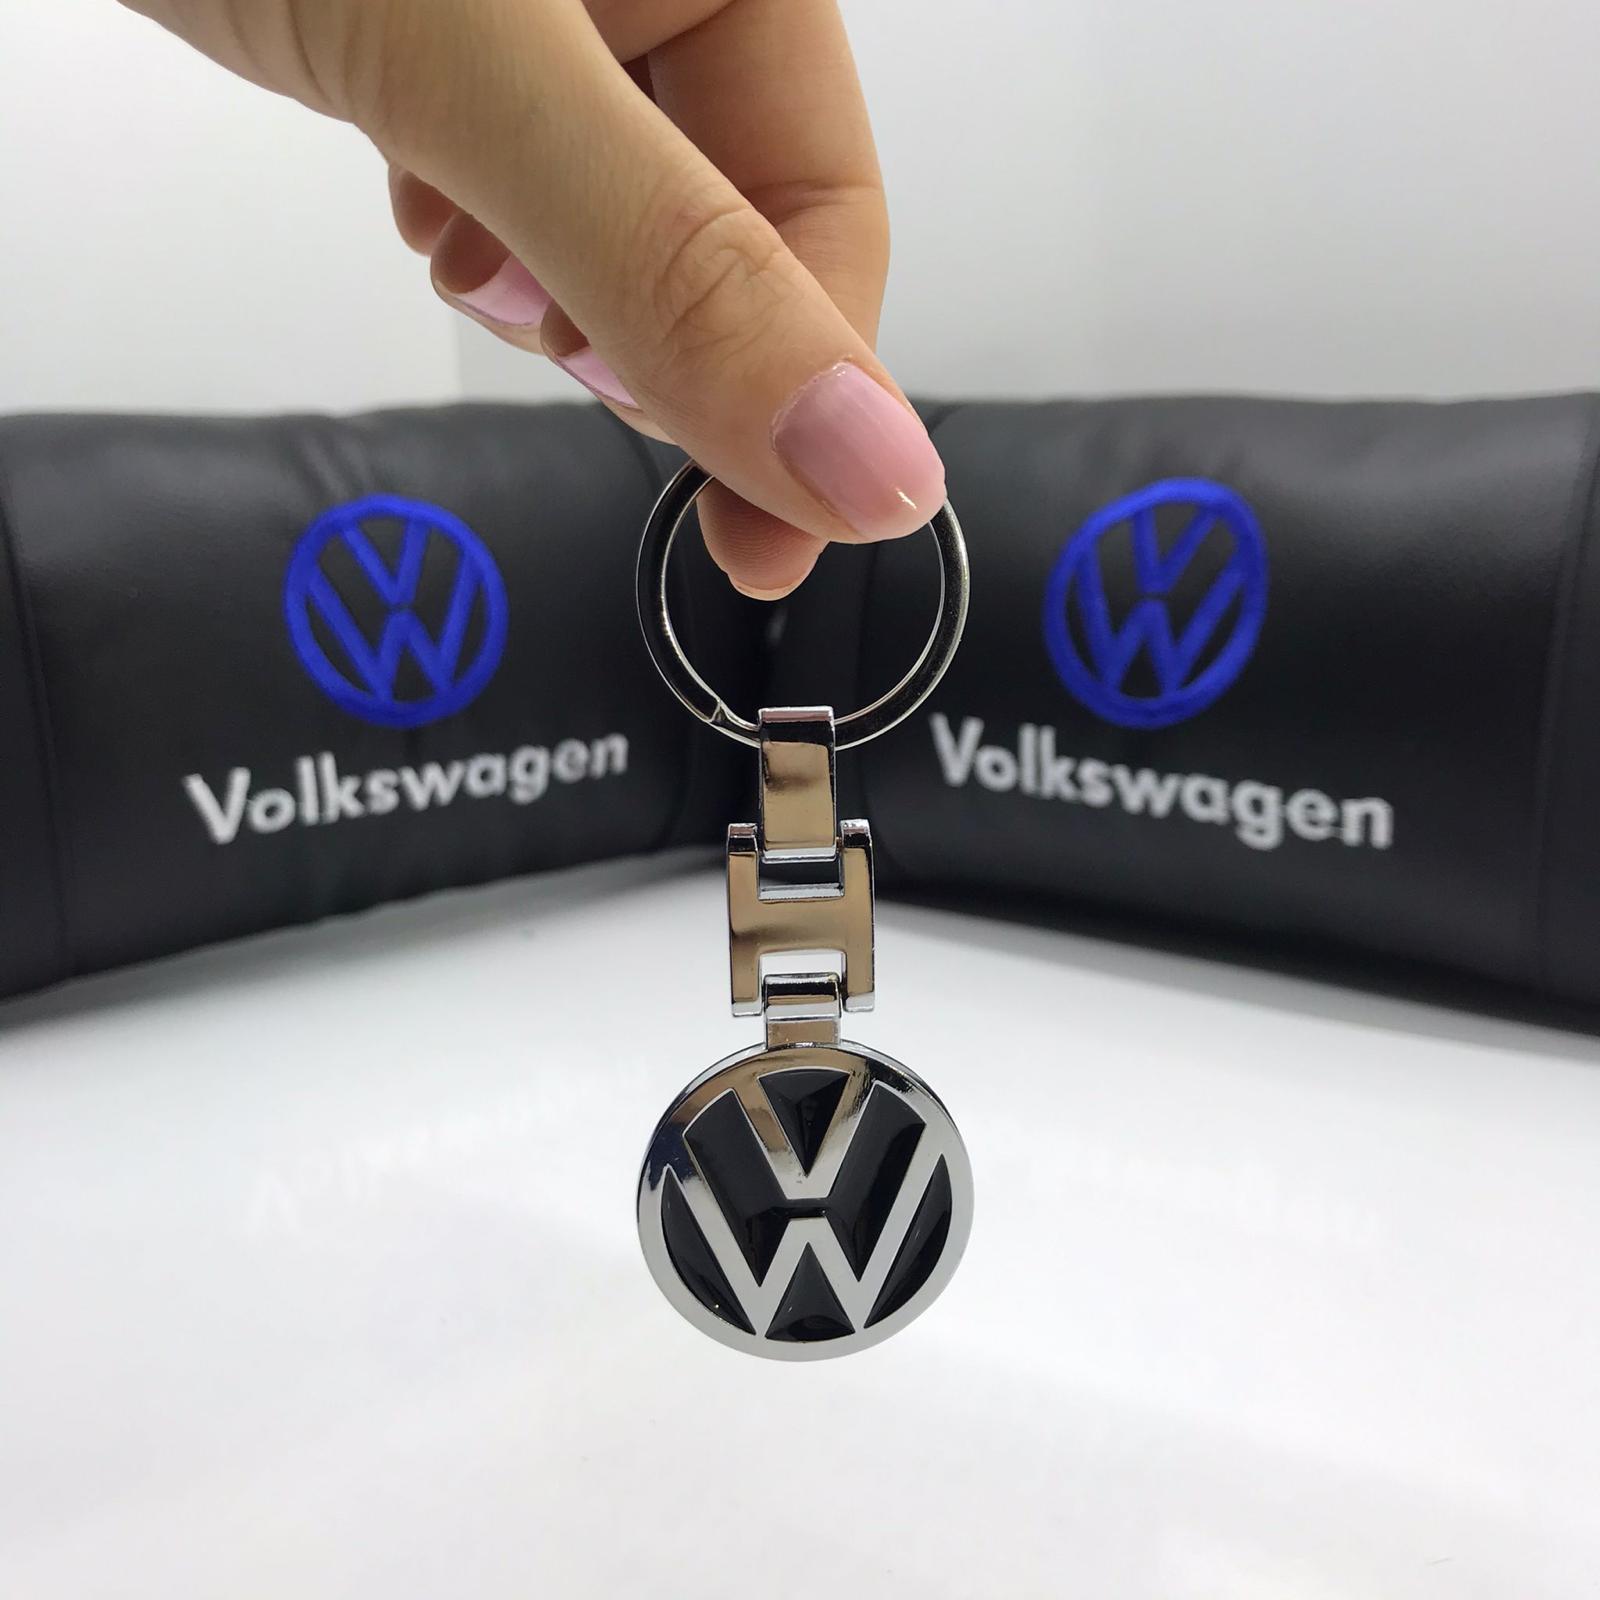 Volkswagen 2 Adet Oto Yastık Ve Anahtarlık Oto Boyun Yastığı Volkswagen Anahtarlık